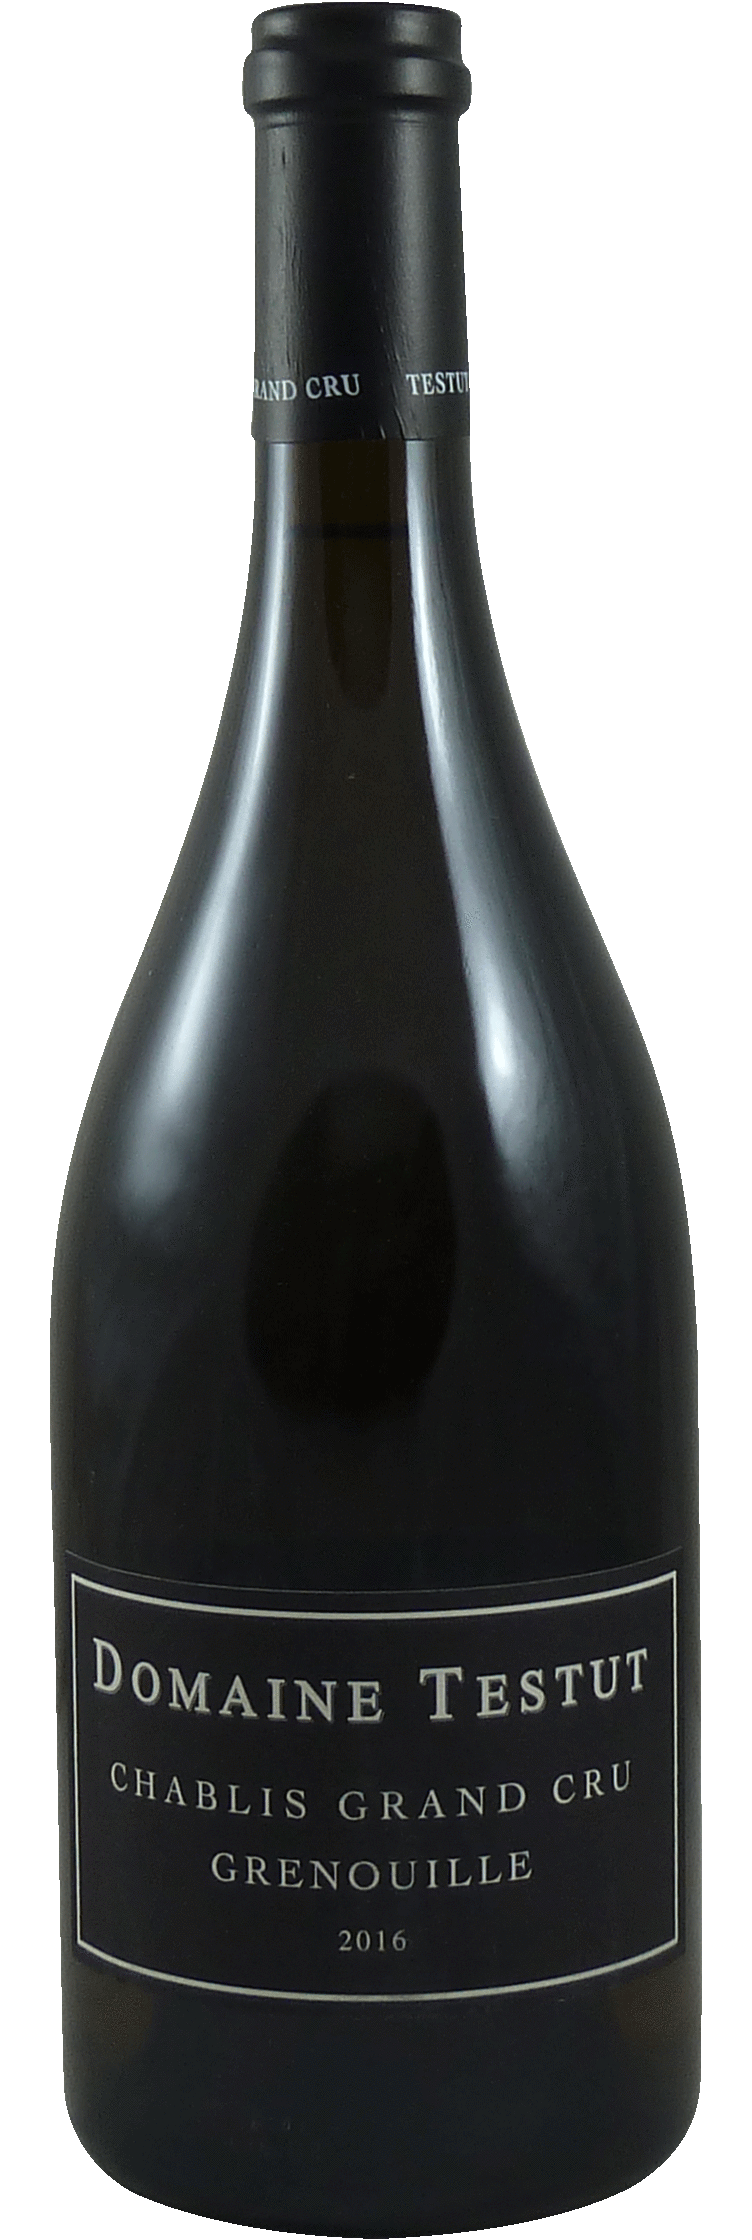 Domaine Testut Chablis Grand Cru Grenouille Blanc 2017 (1x75cl) - TwoMoreGlasses.com